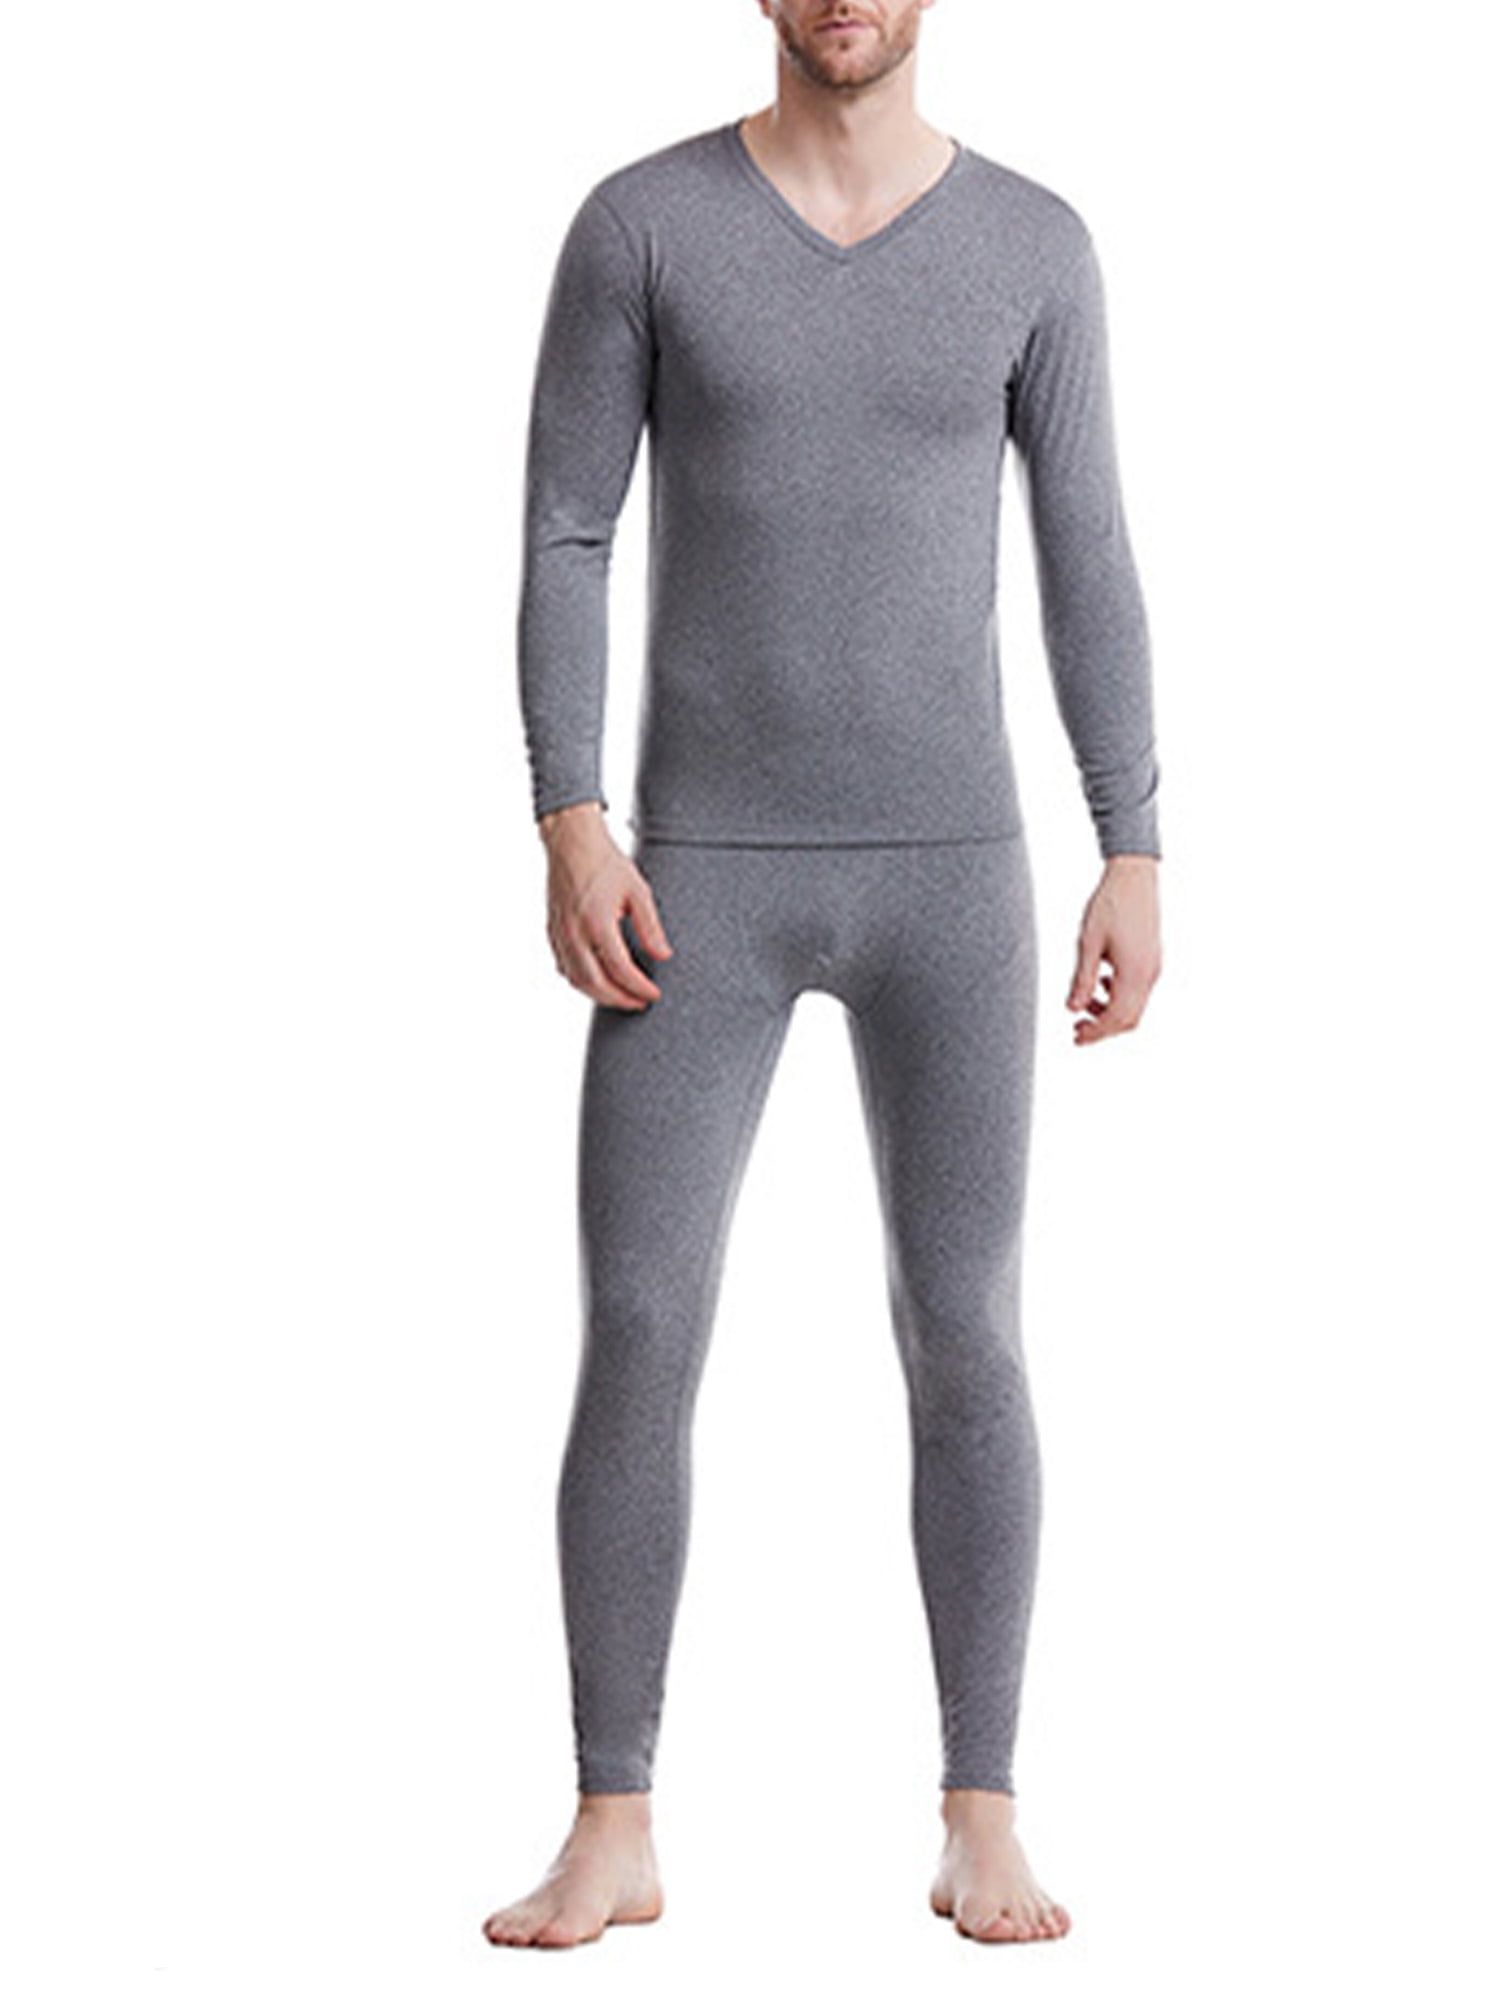 Men Thermal Underwear Set Winter Skiing Warm Top Bottom Thermal Long Johns Black